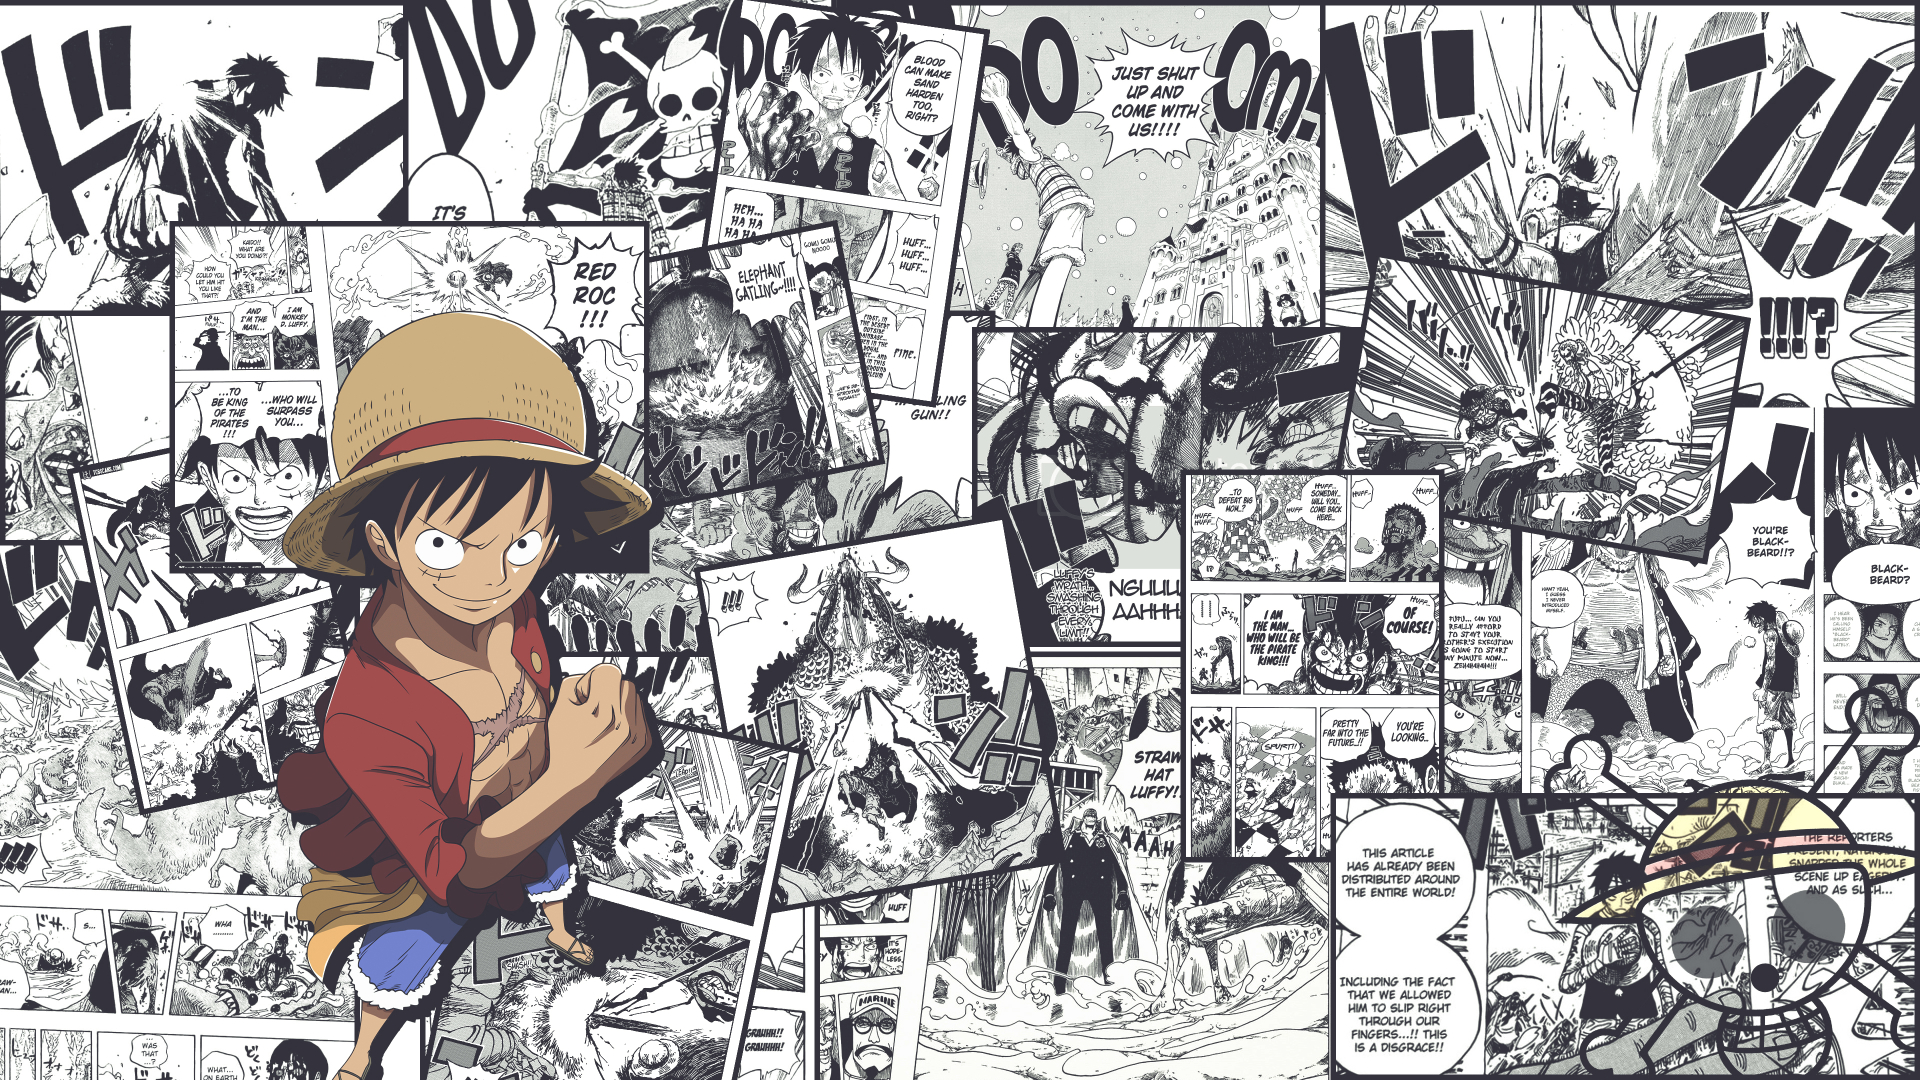 Free One Piece Wallpaper Downloads 600 One Piece Wallpapers for FREE   Wallpaperscom